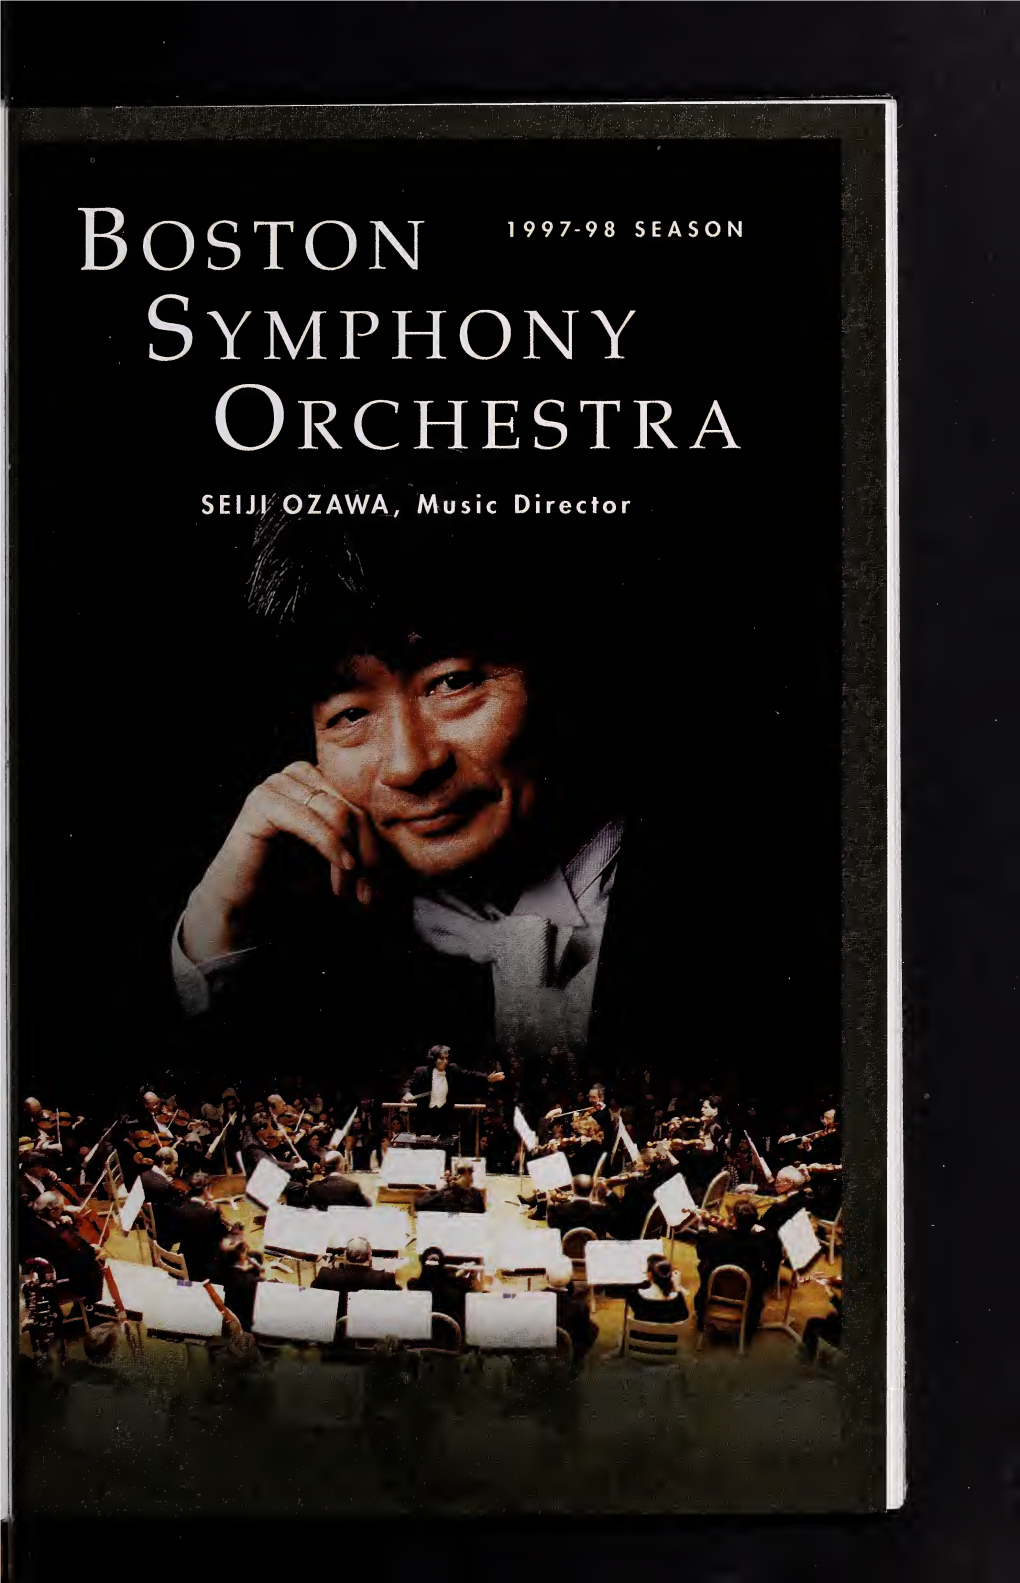 Boston Symphony Orchestra Concert Programs, Season 117, 1997